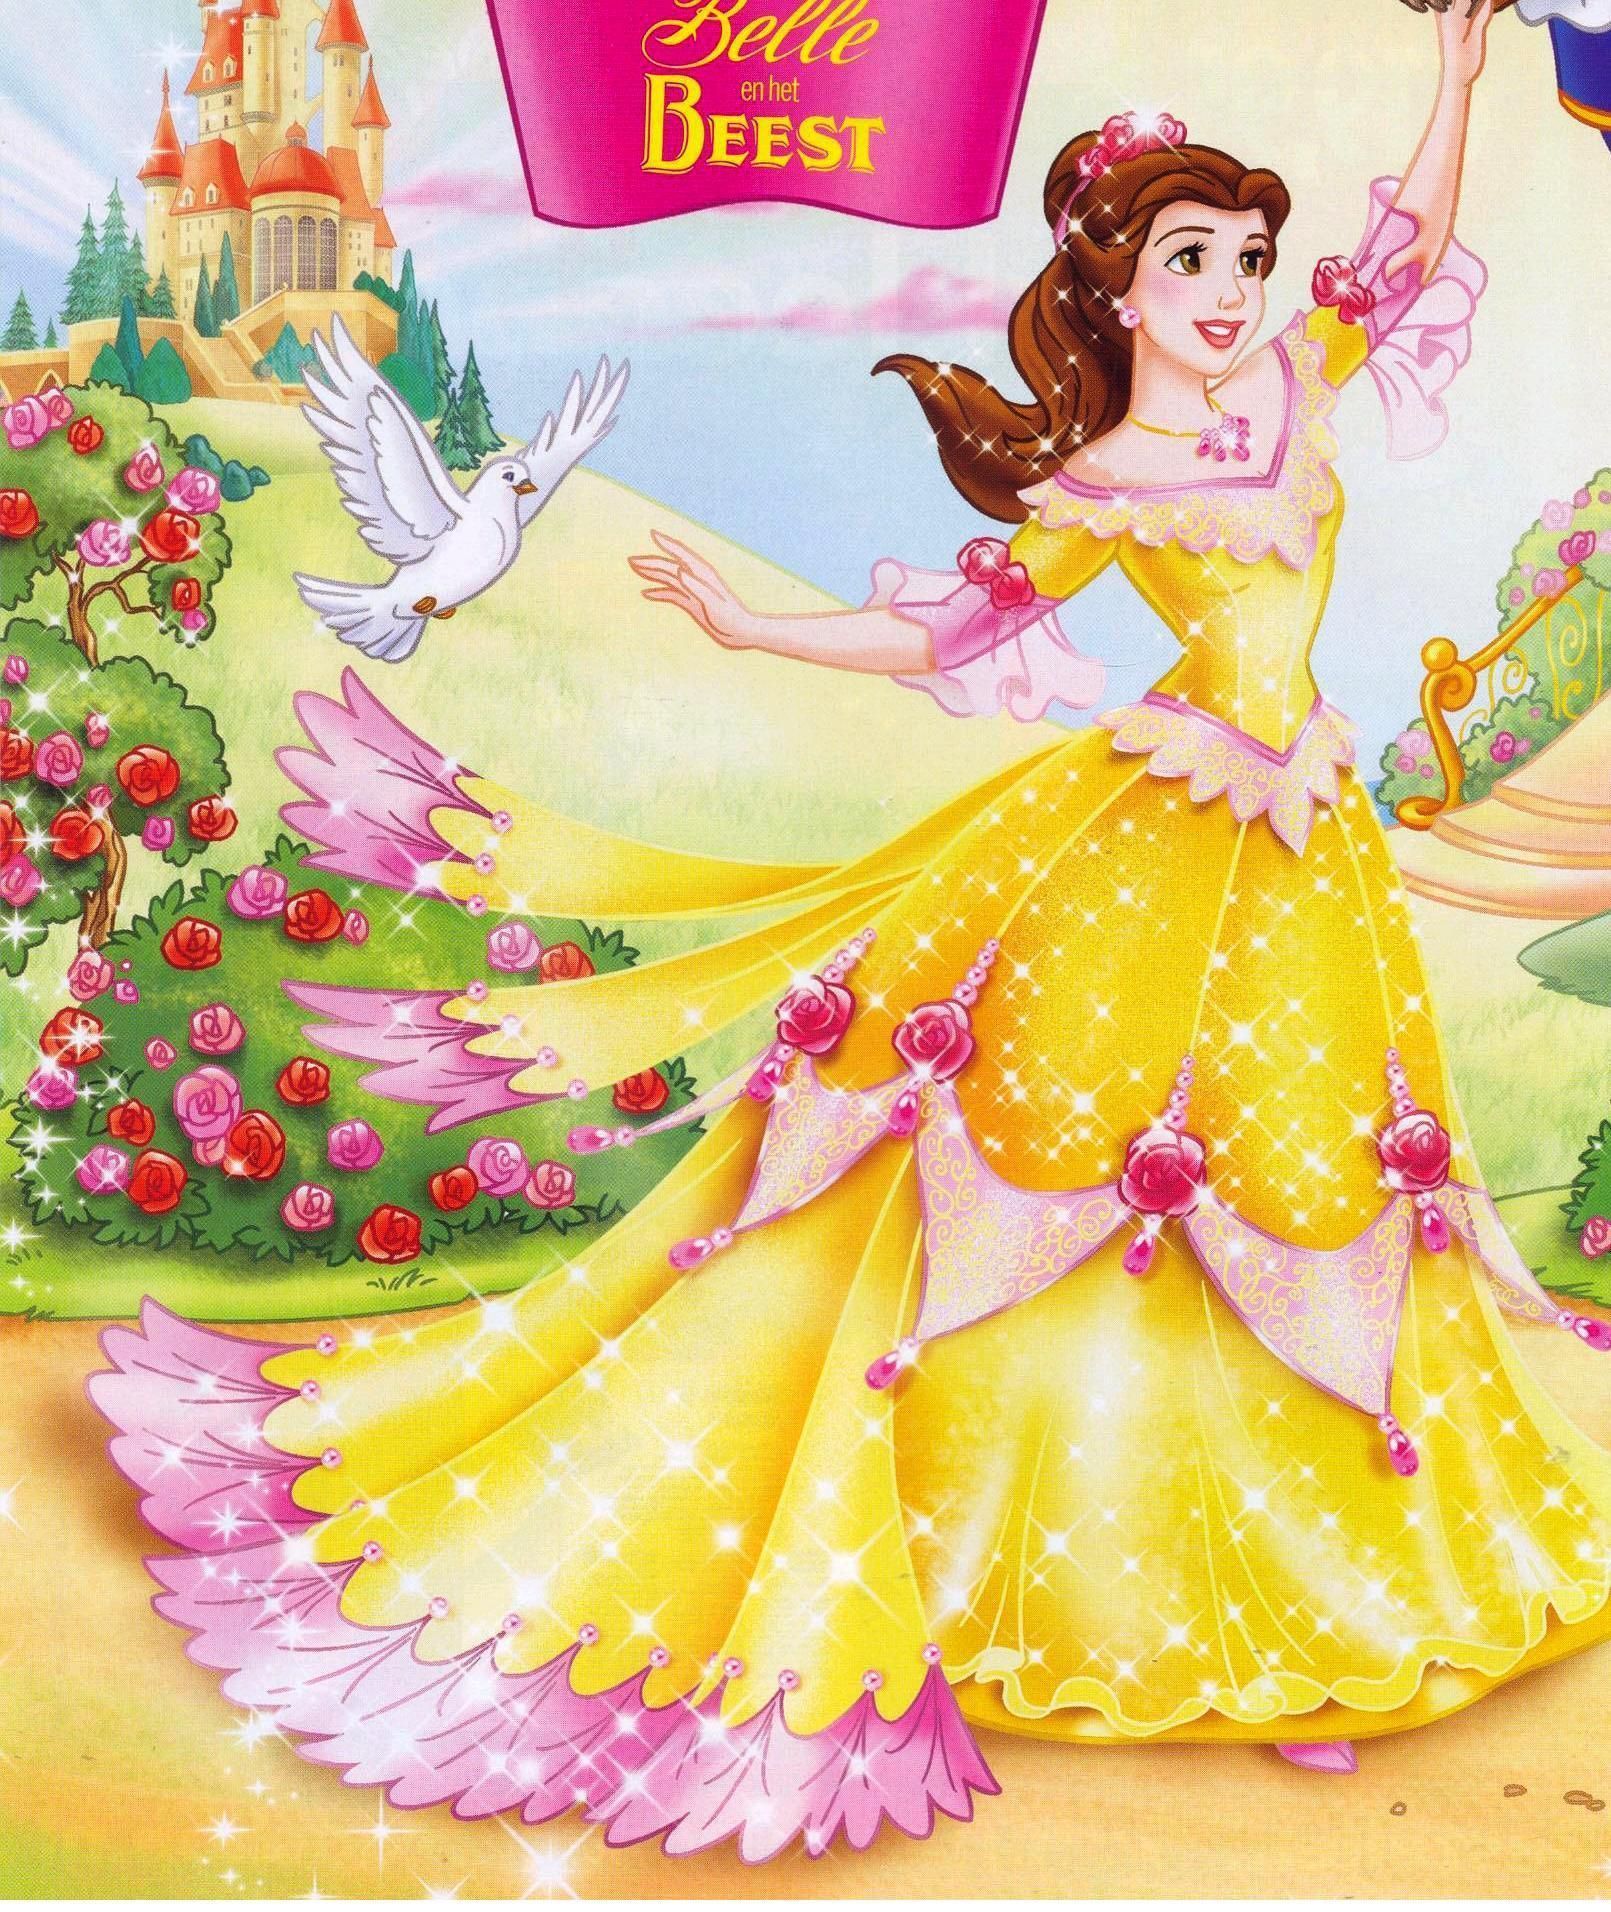 Disney Princess Belle Images Wallpapers